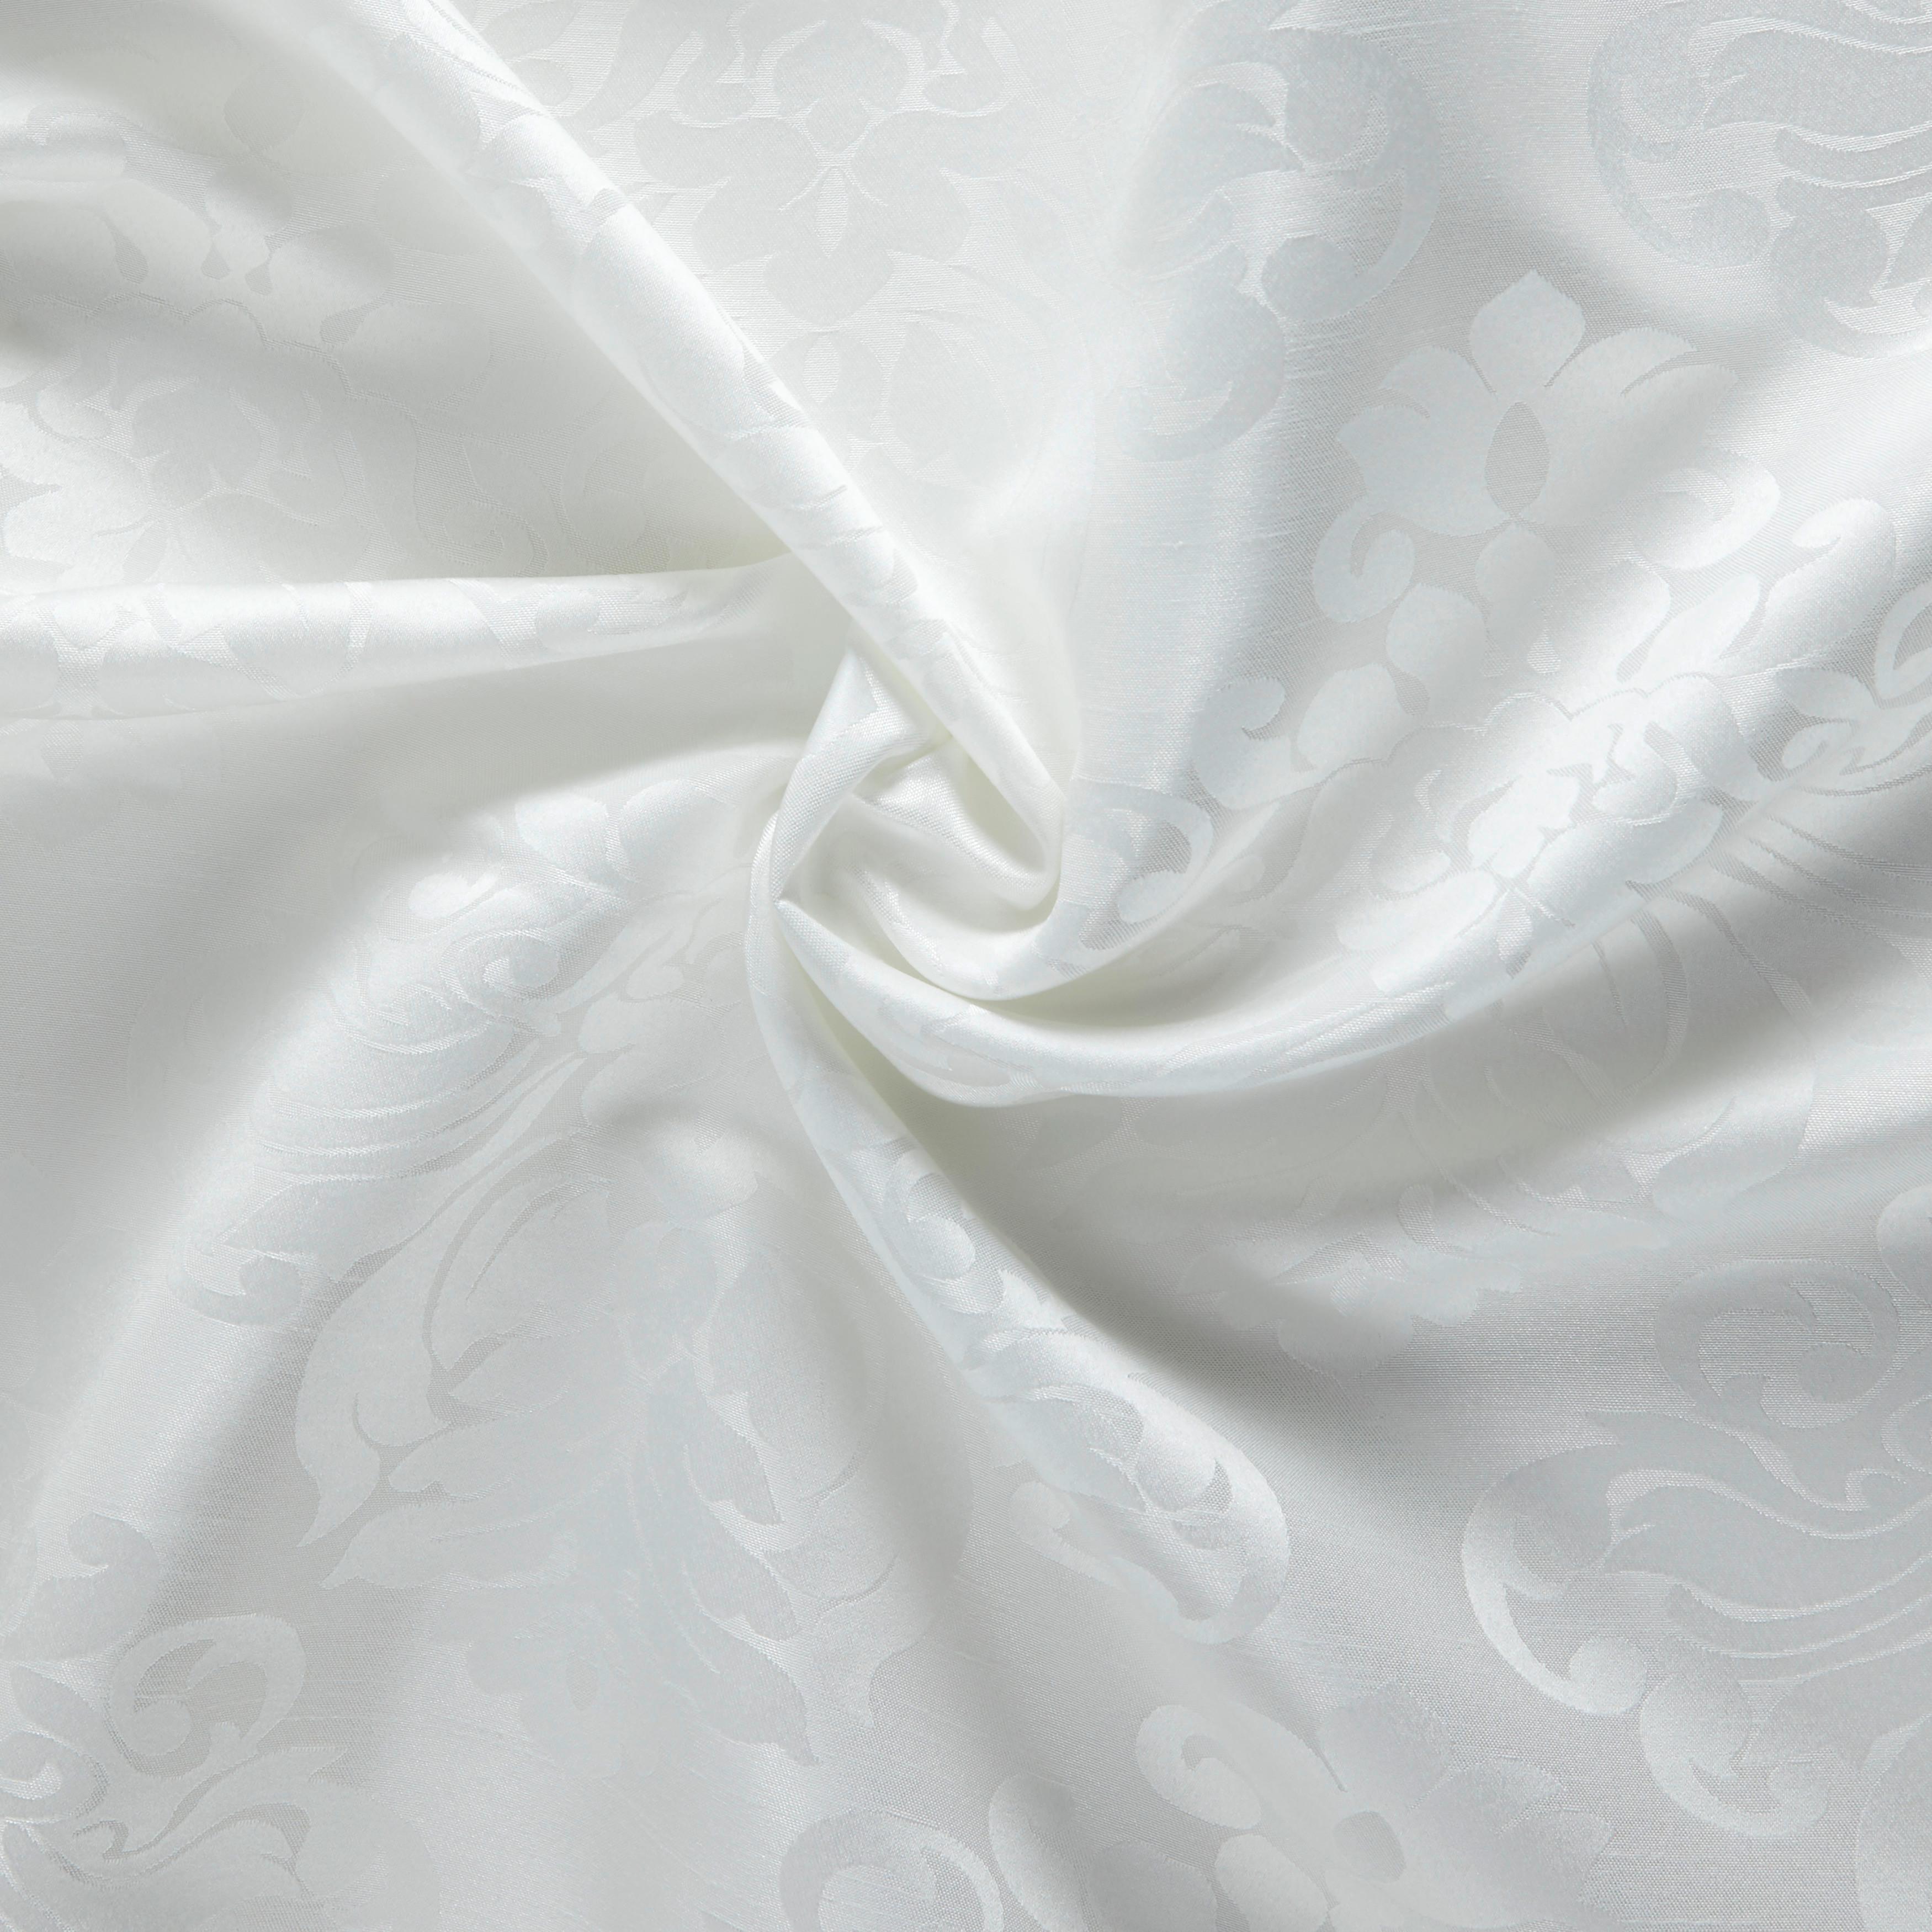 Draperie prefabricată Charles - alb, Lifestyle, textil (140/245cm) - Modern Living